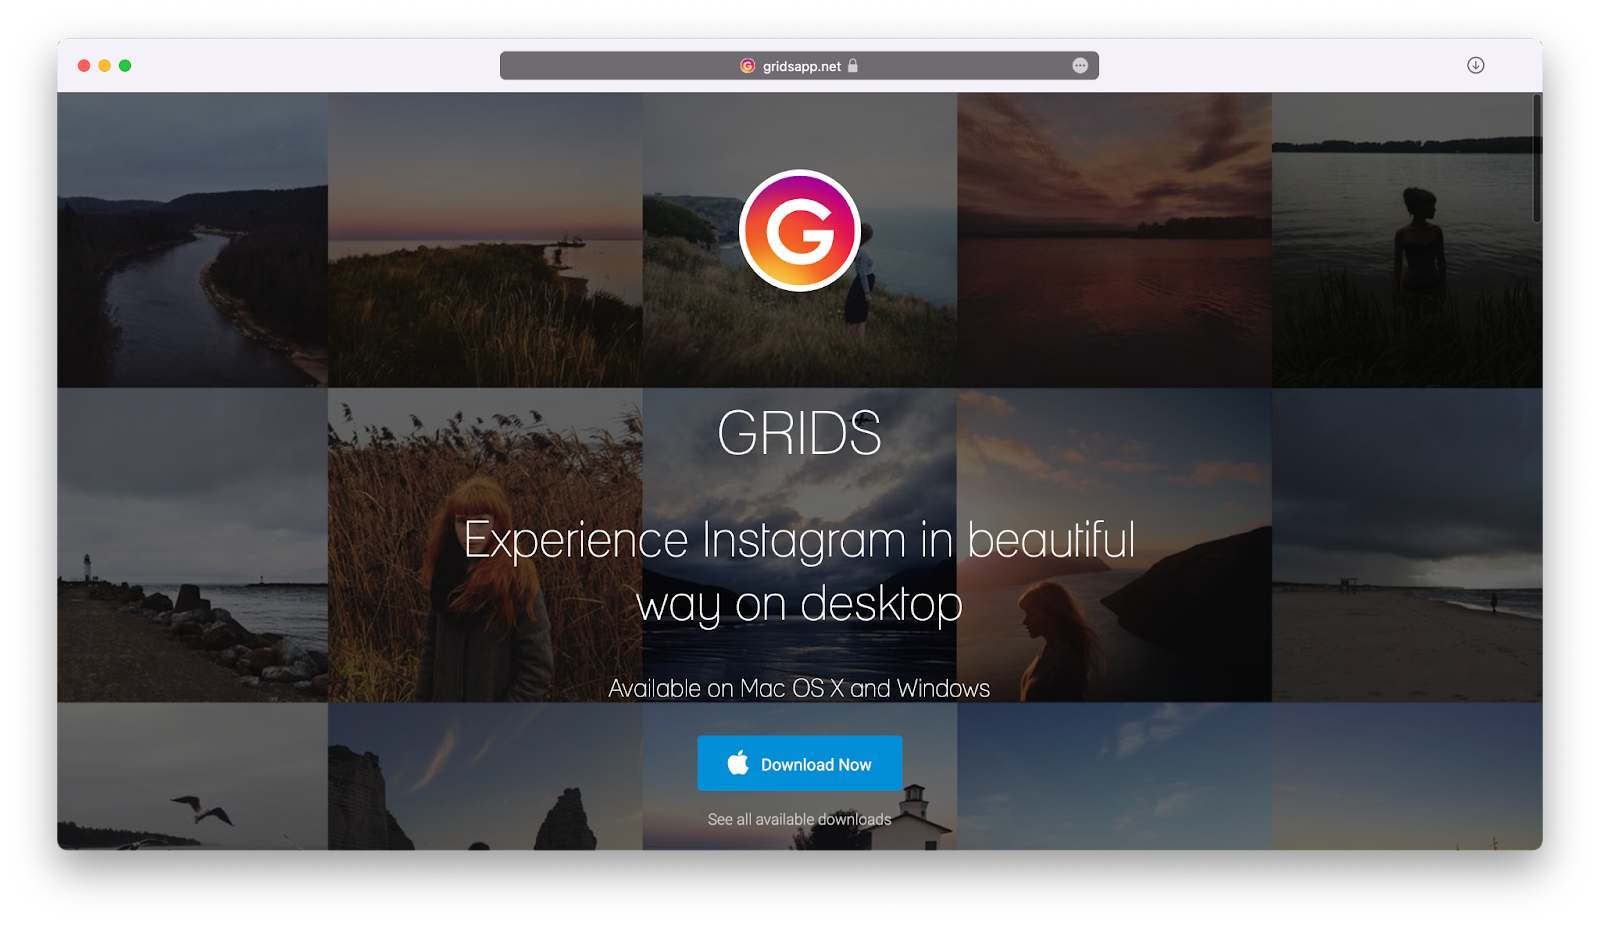 GRIDS Experience Instagram in beautiful way on desktop